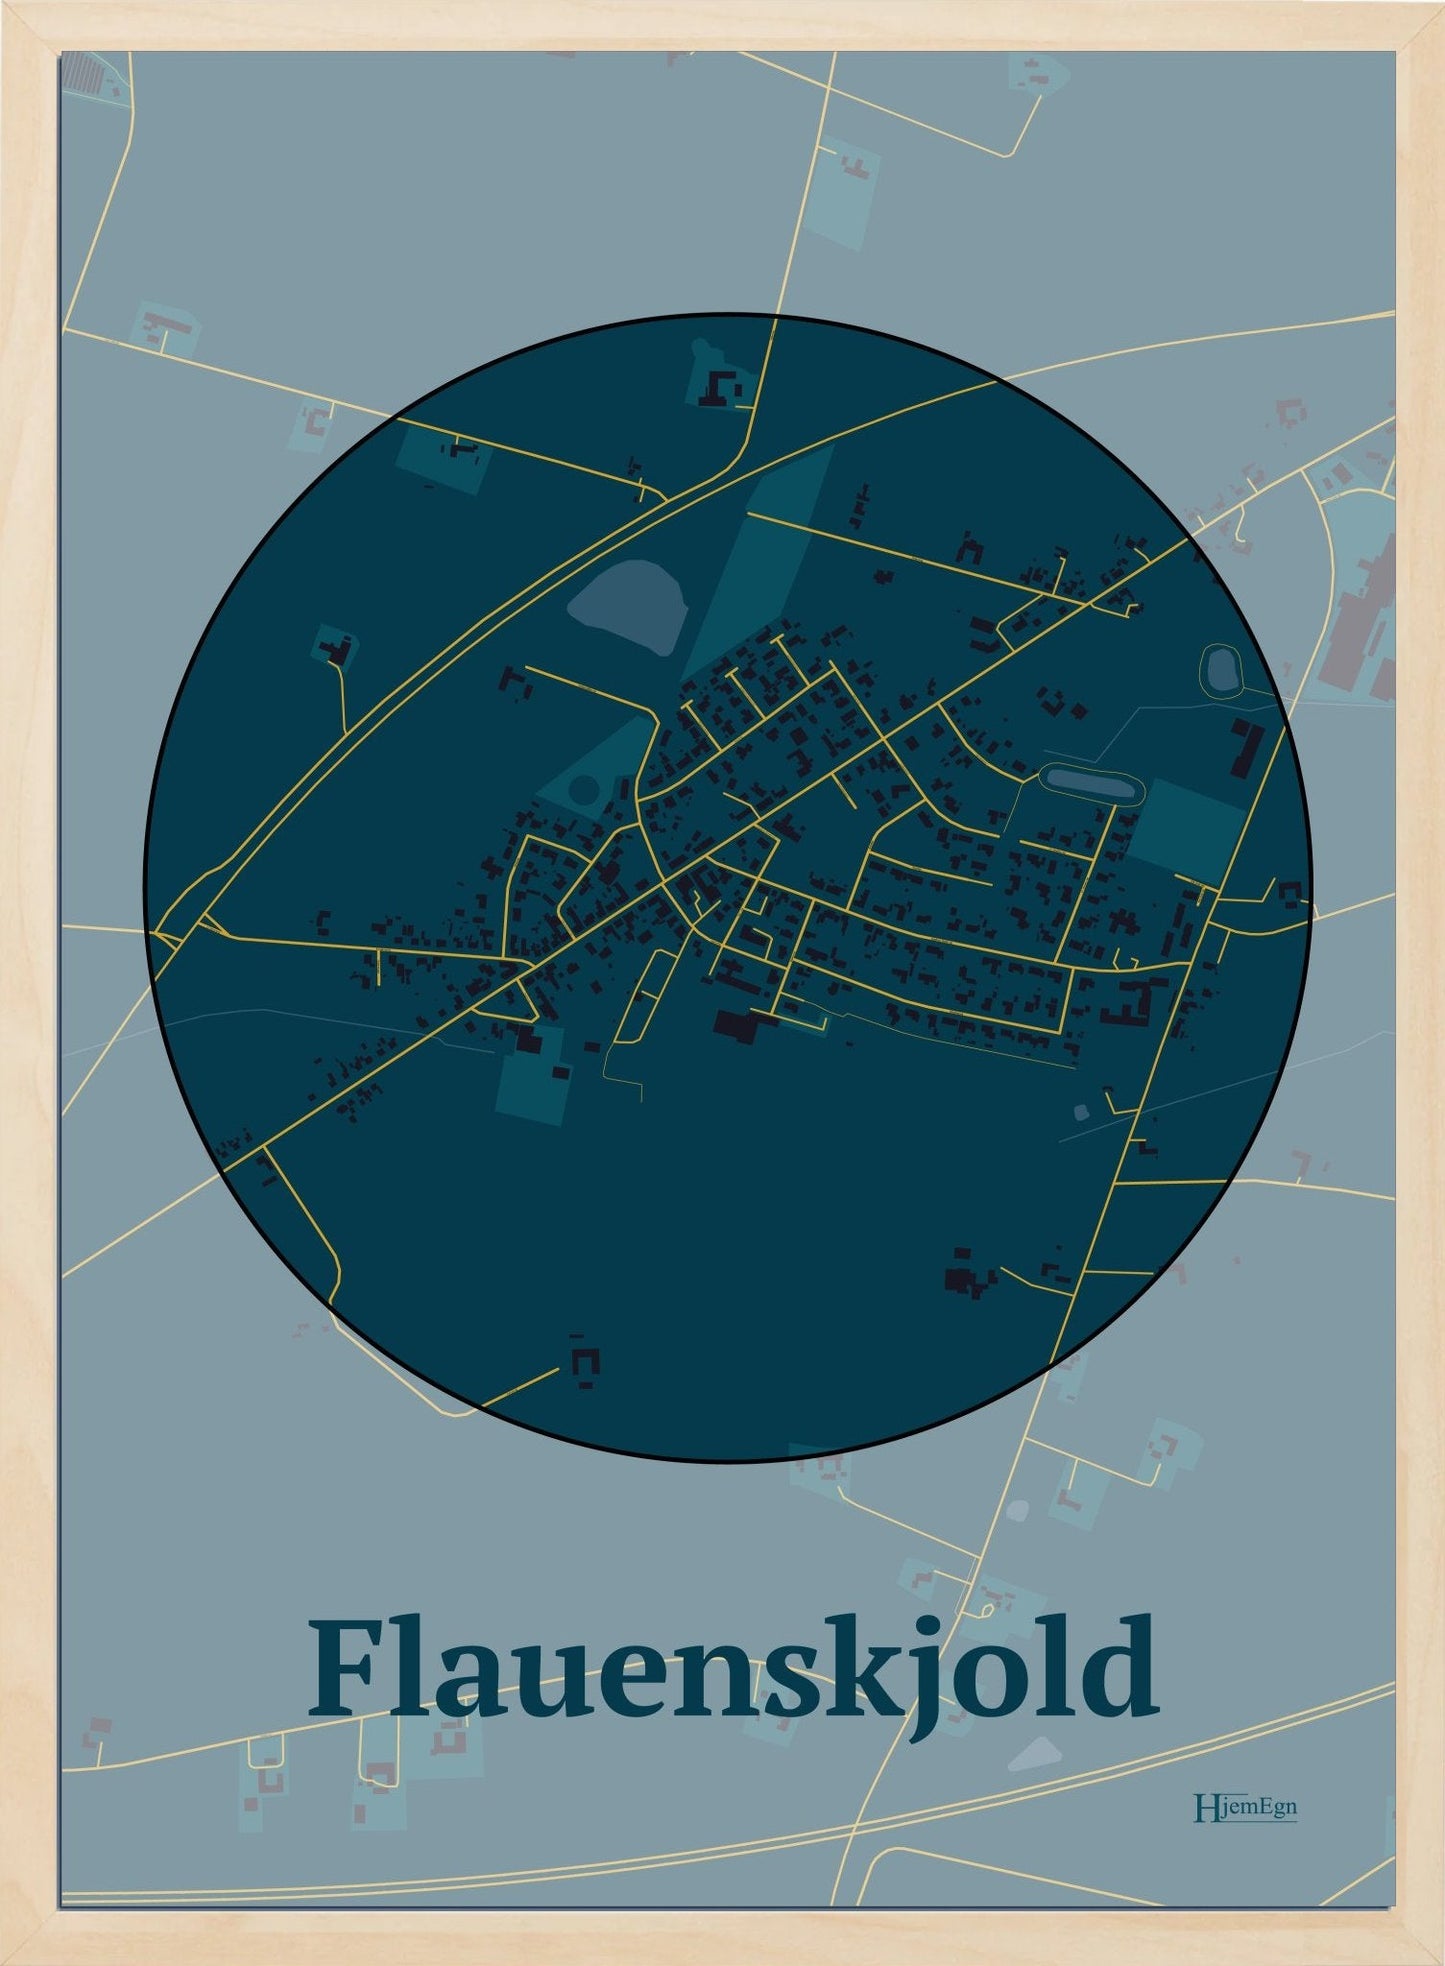 Flauenskjold plakat i farve mørk blå og HjemEgn.dk design centrum. Design bykort for Flauenskjold